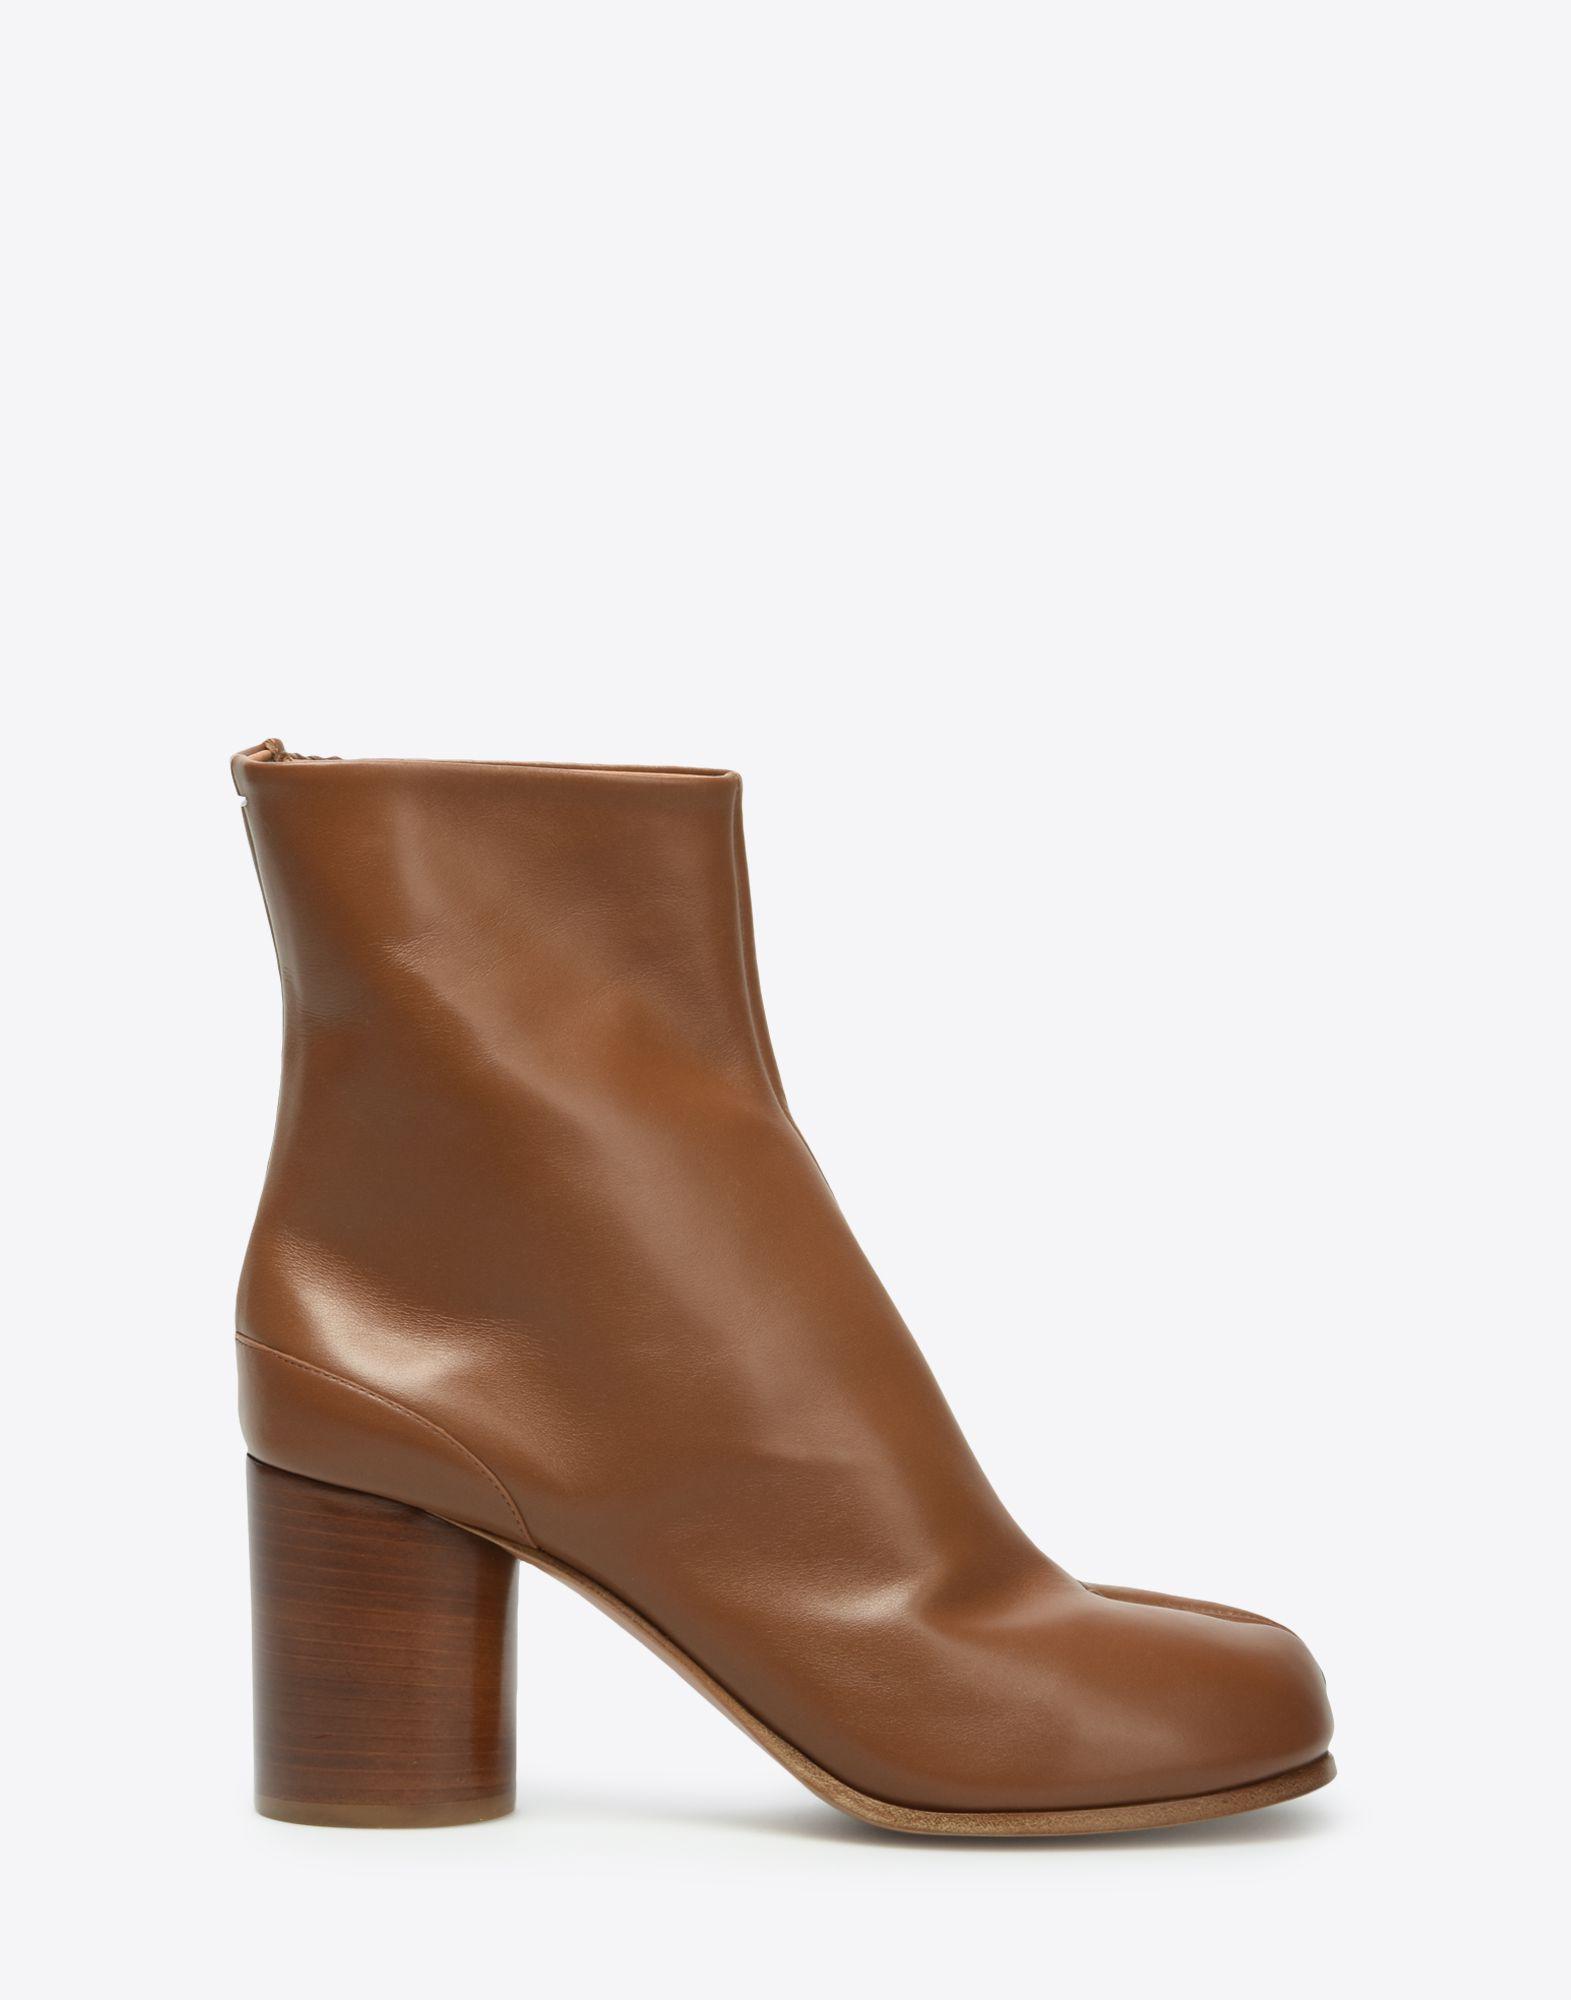 Maison Margiela Leather Tabi Calfskin Boots in Tan (Brown) - Lyst